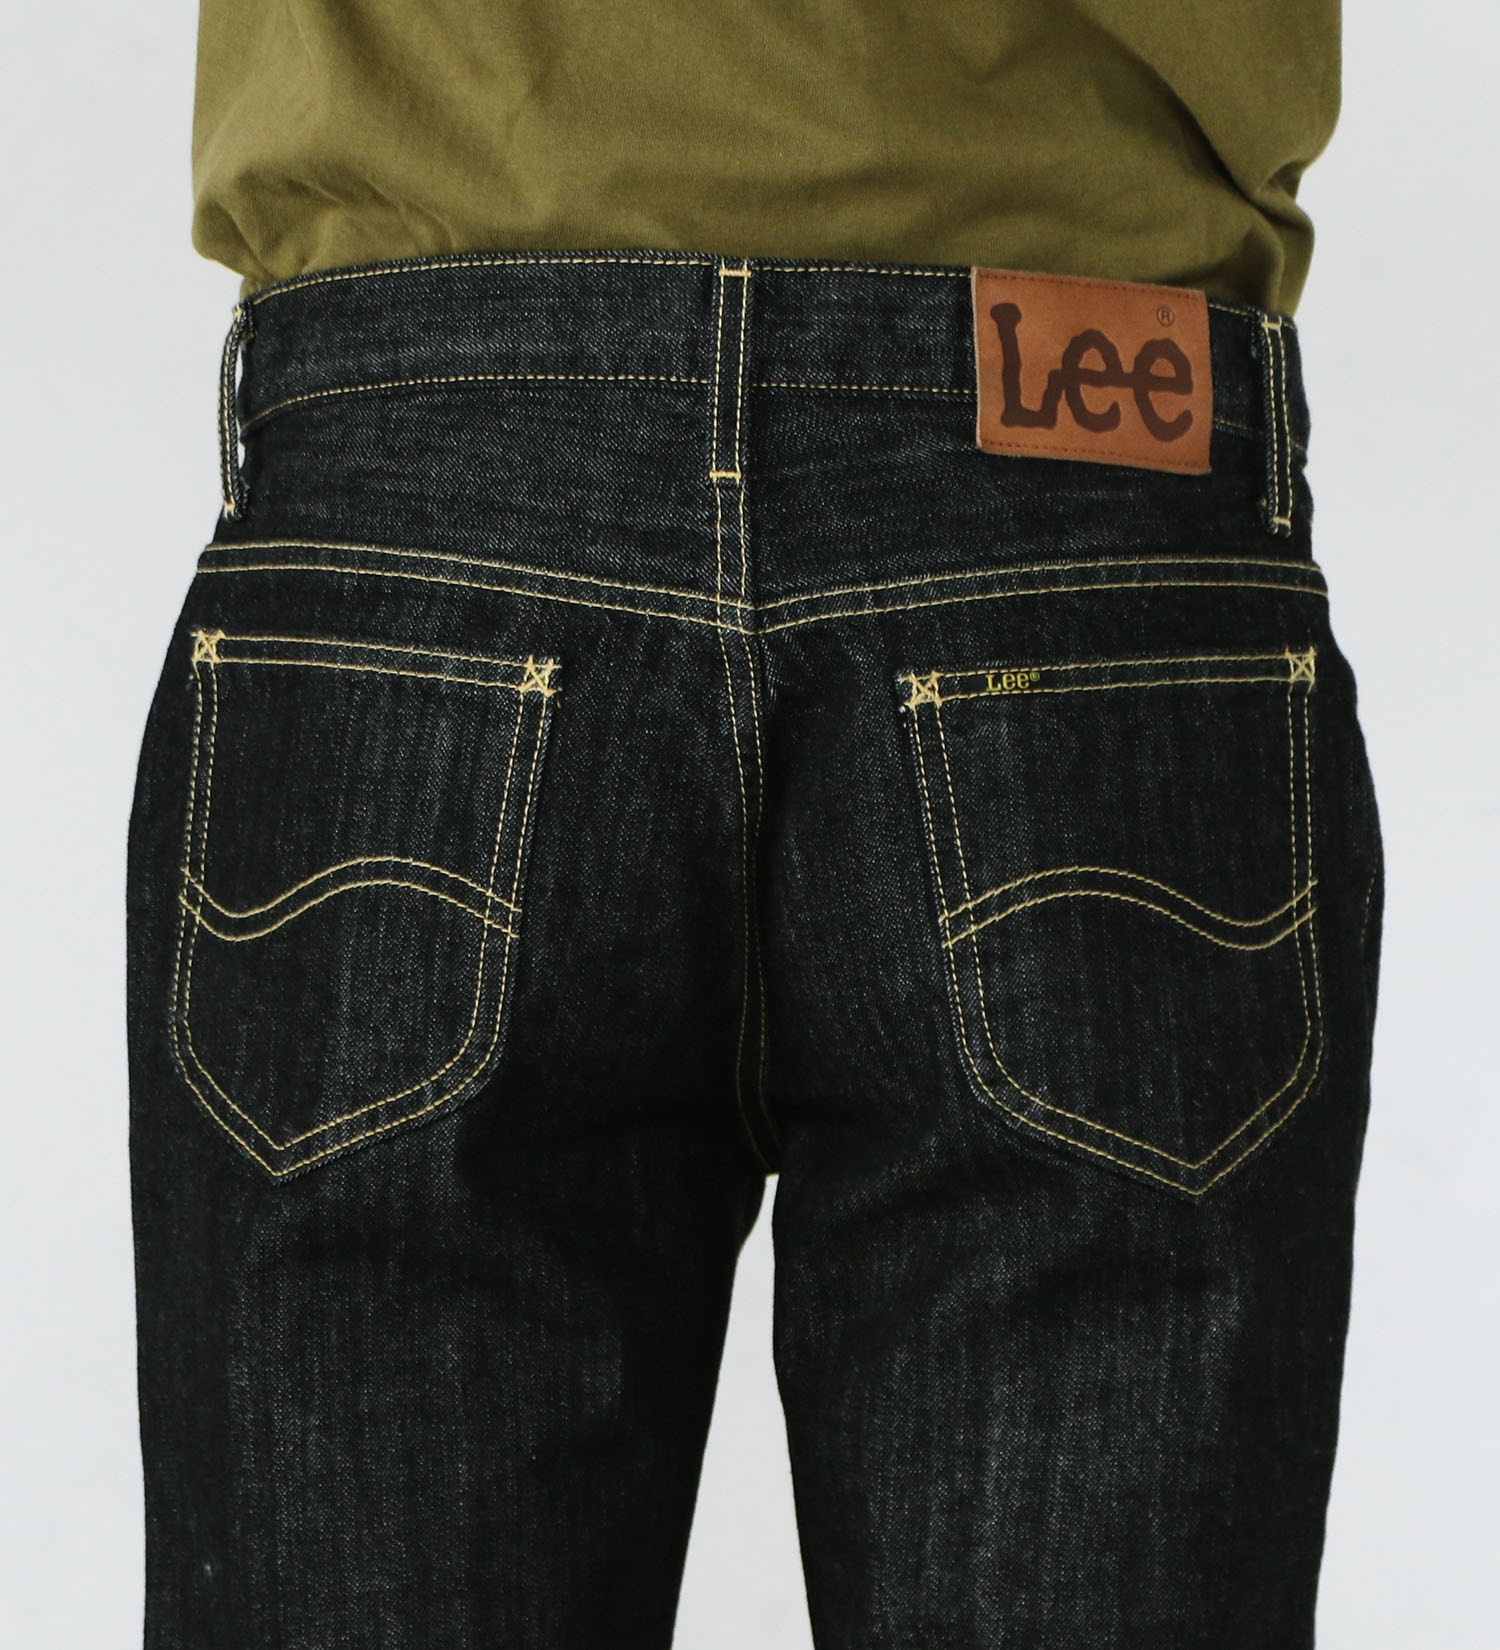 Lee(リー)の【10％OFF対象】AMERICAN STANDARD 202ベルボトムジーンズ|パンツ/デニムパンツ/メンズ|ブラックデニム